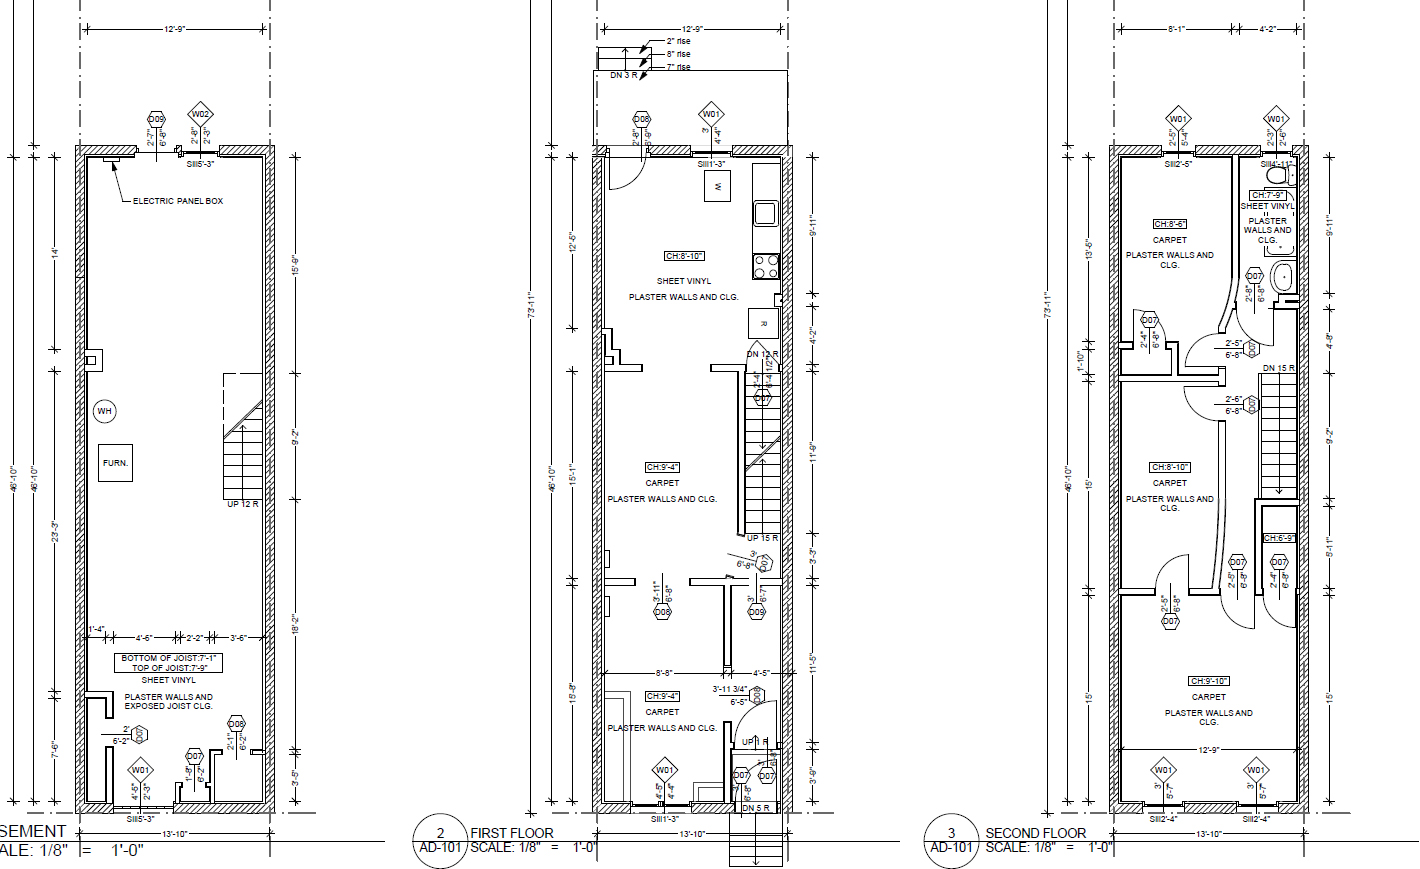 2 Bedroom Basement Apartment Plans